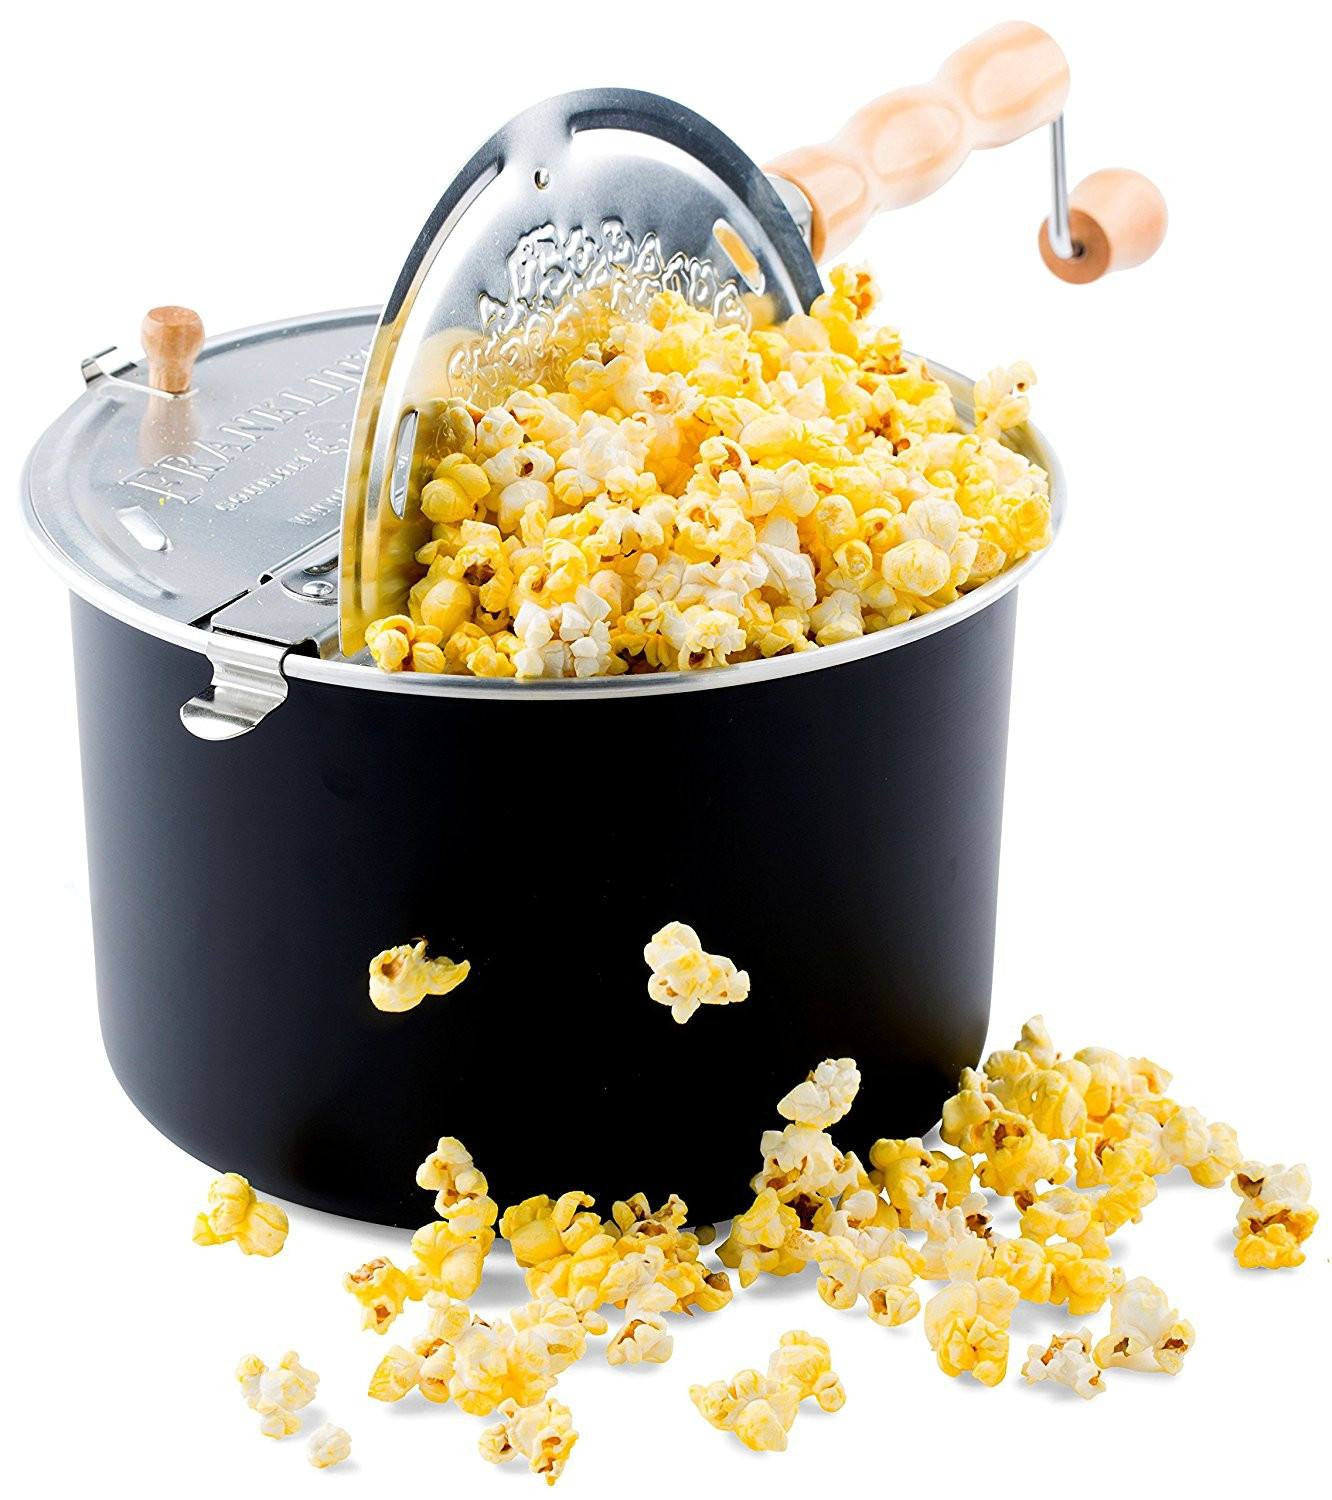 Popcorn Machines - Franklin's Whirley Pop Stove Top Popcorn Maker